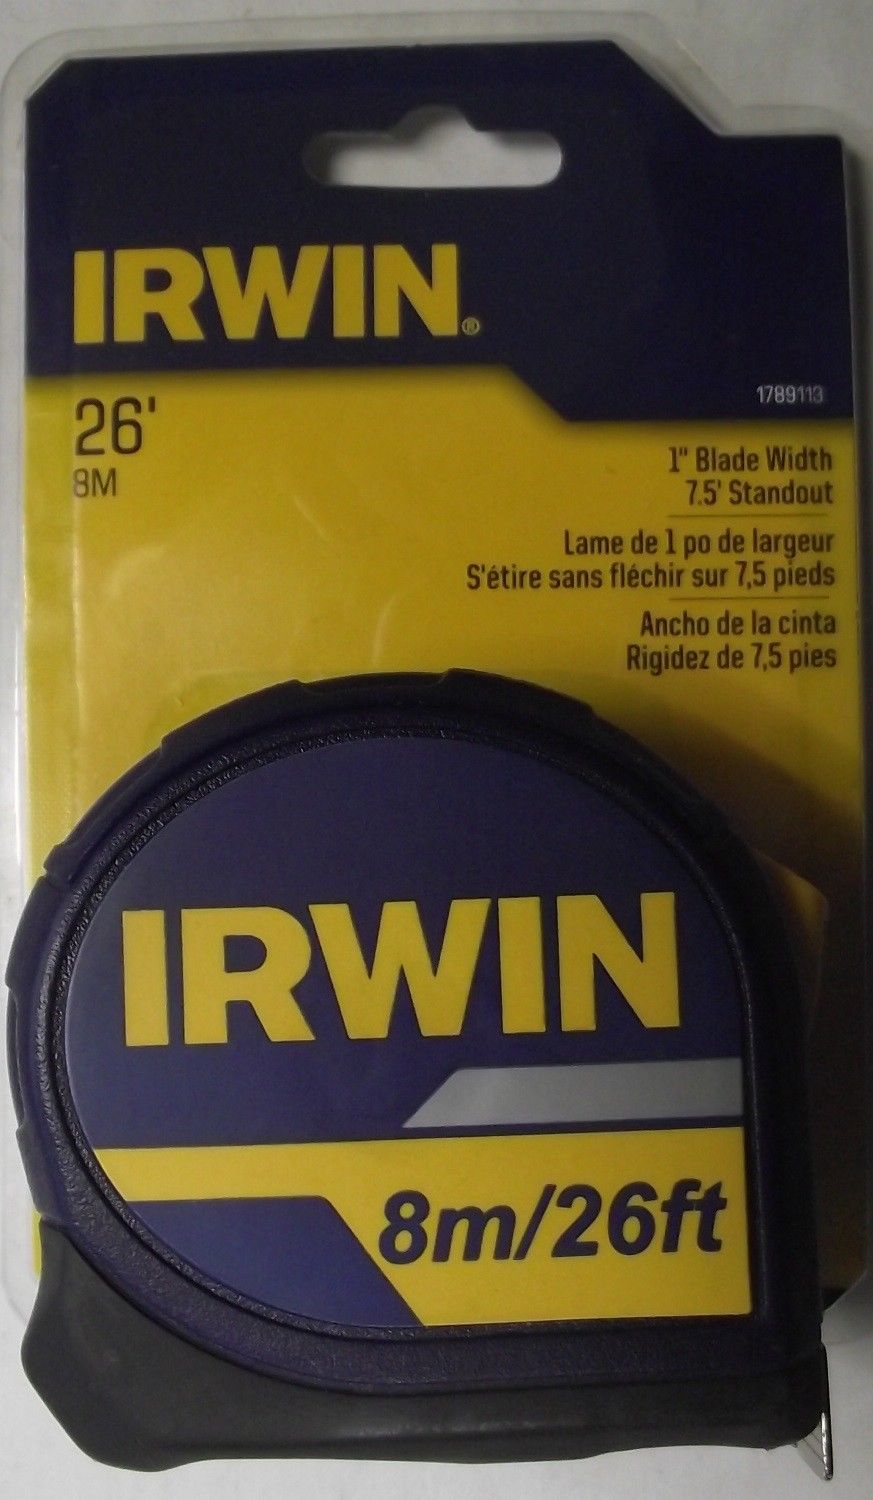 Irwin 1789113 26' x 1 Blade Inch & Millimeter Tape Measure